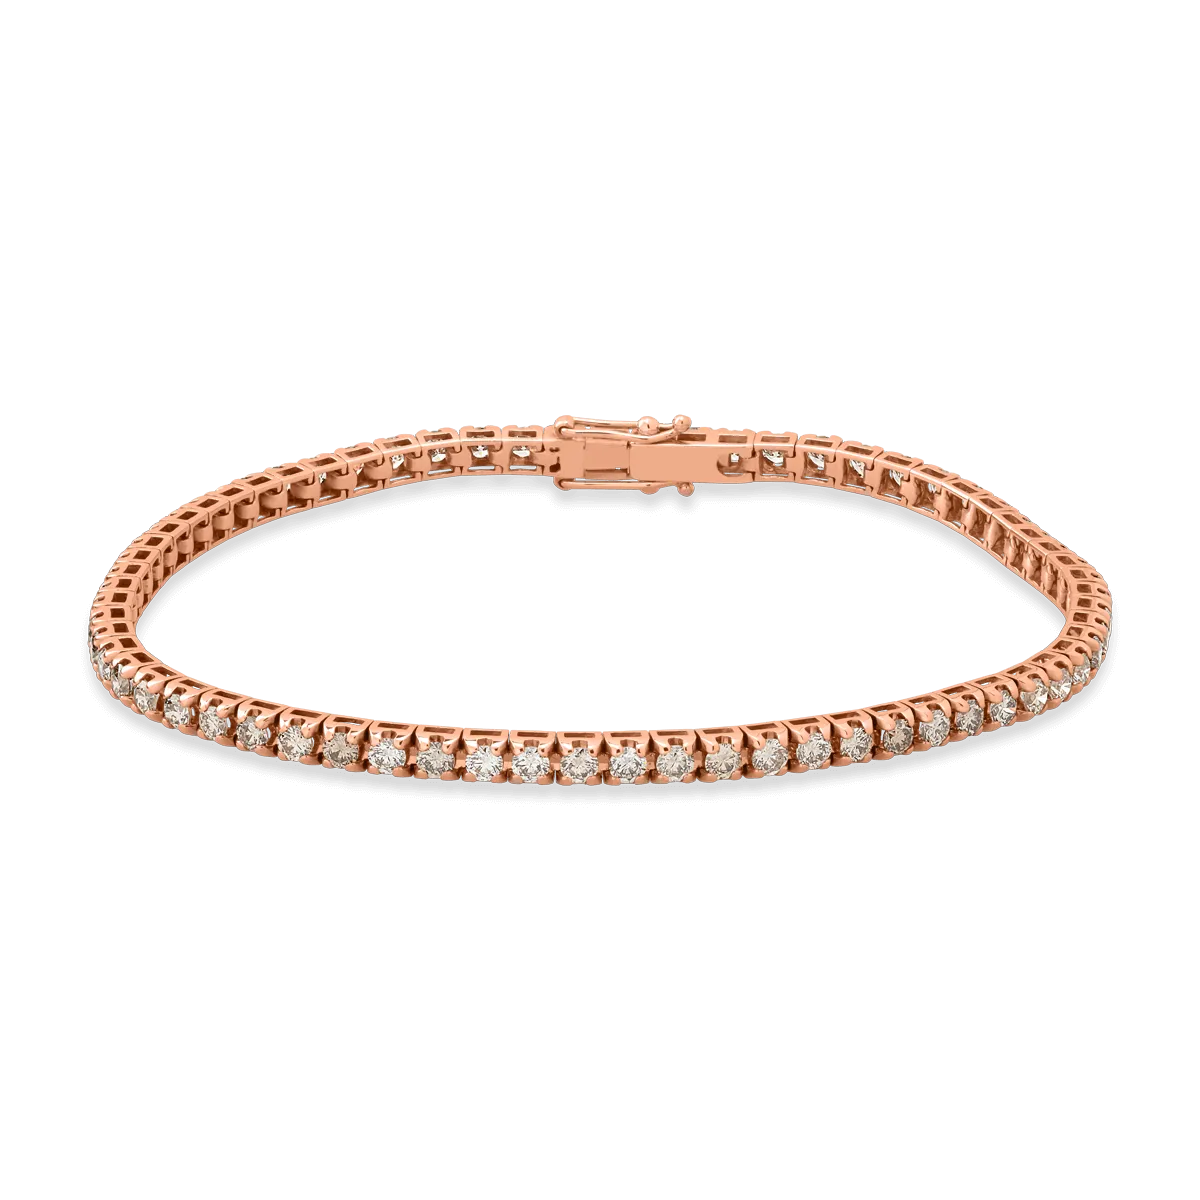 18K rose gold tennis bracelet with 3.3ct brown diamonds